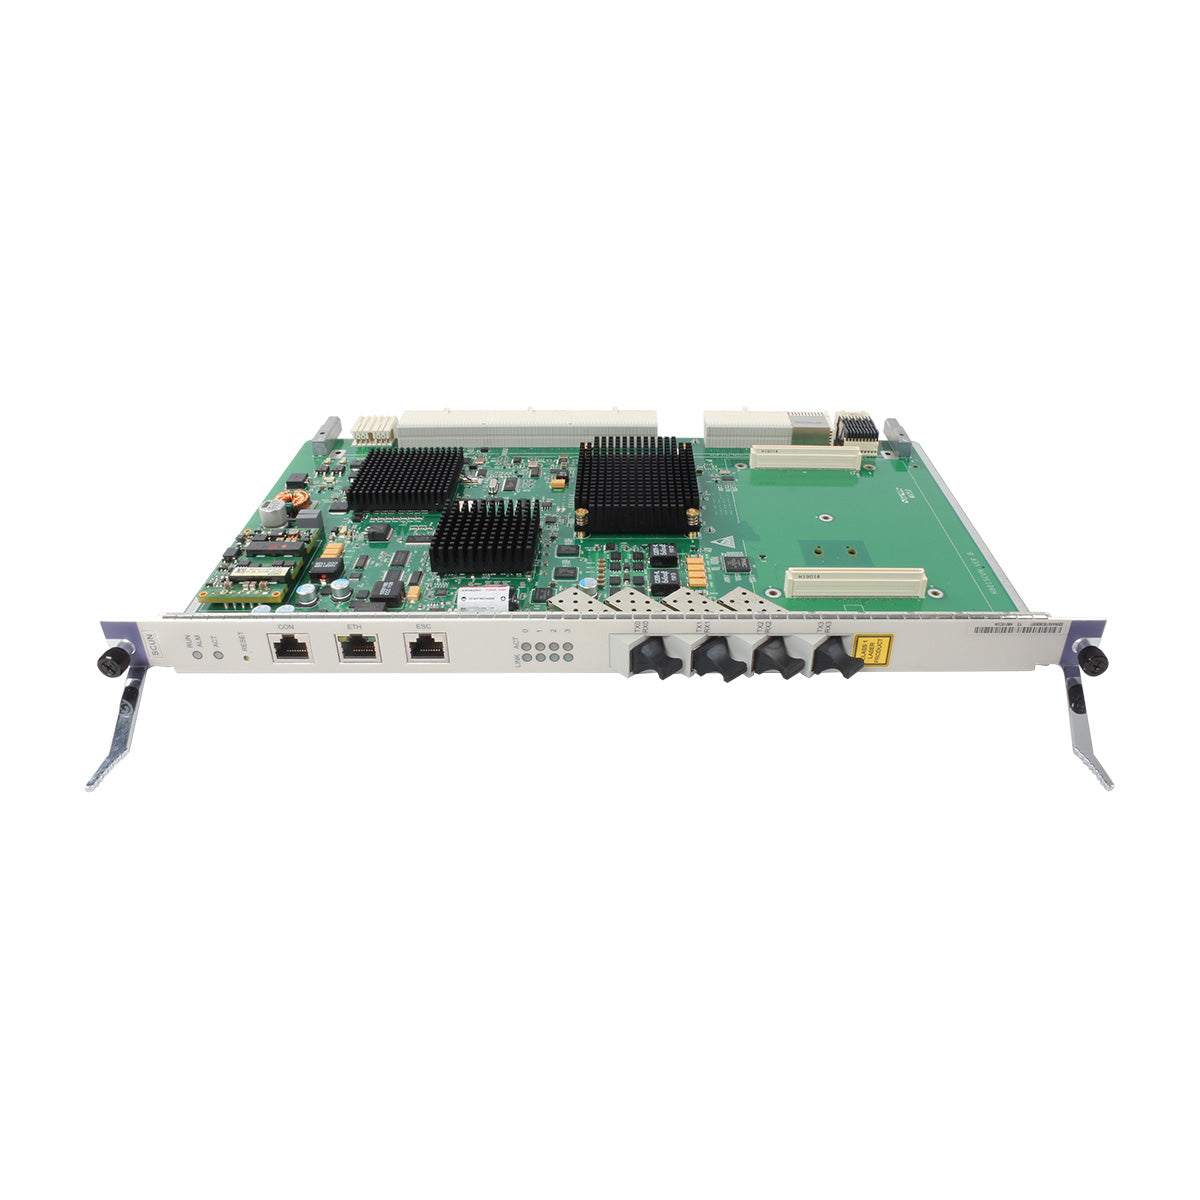 Huawei H802SCUN Main Control Board for MA5680T/MA5683T OLT